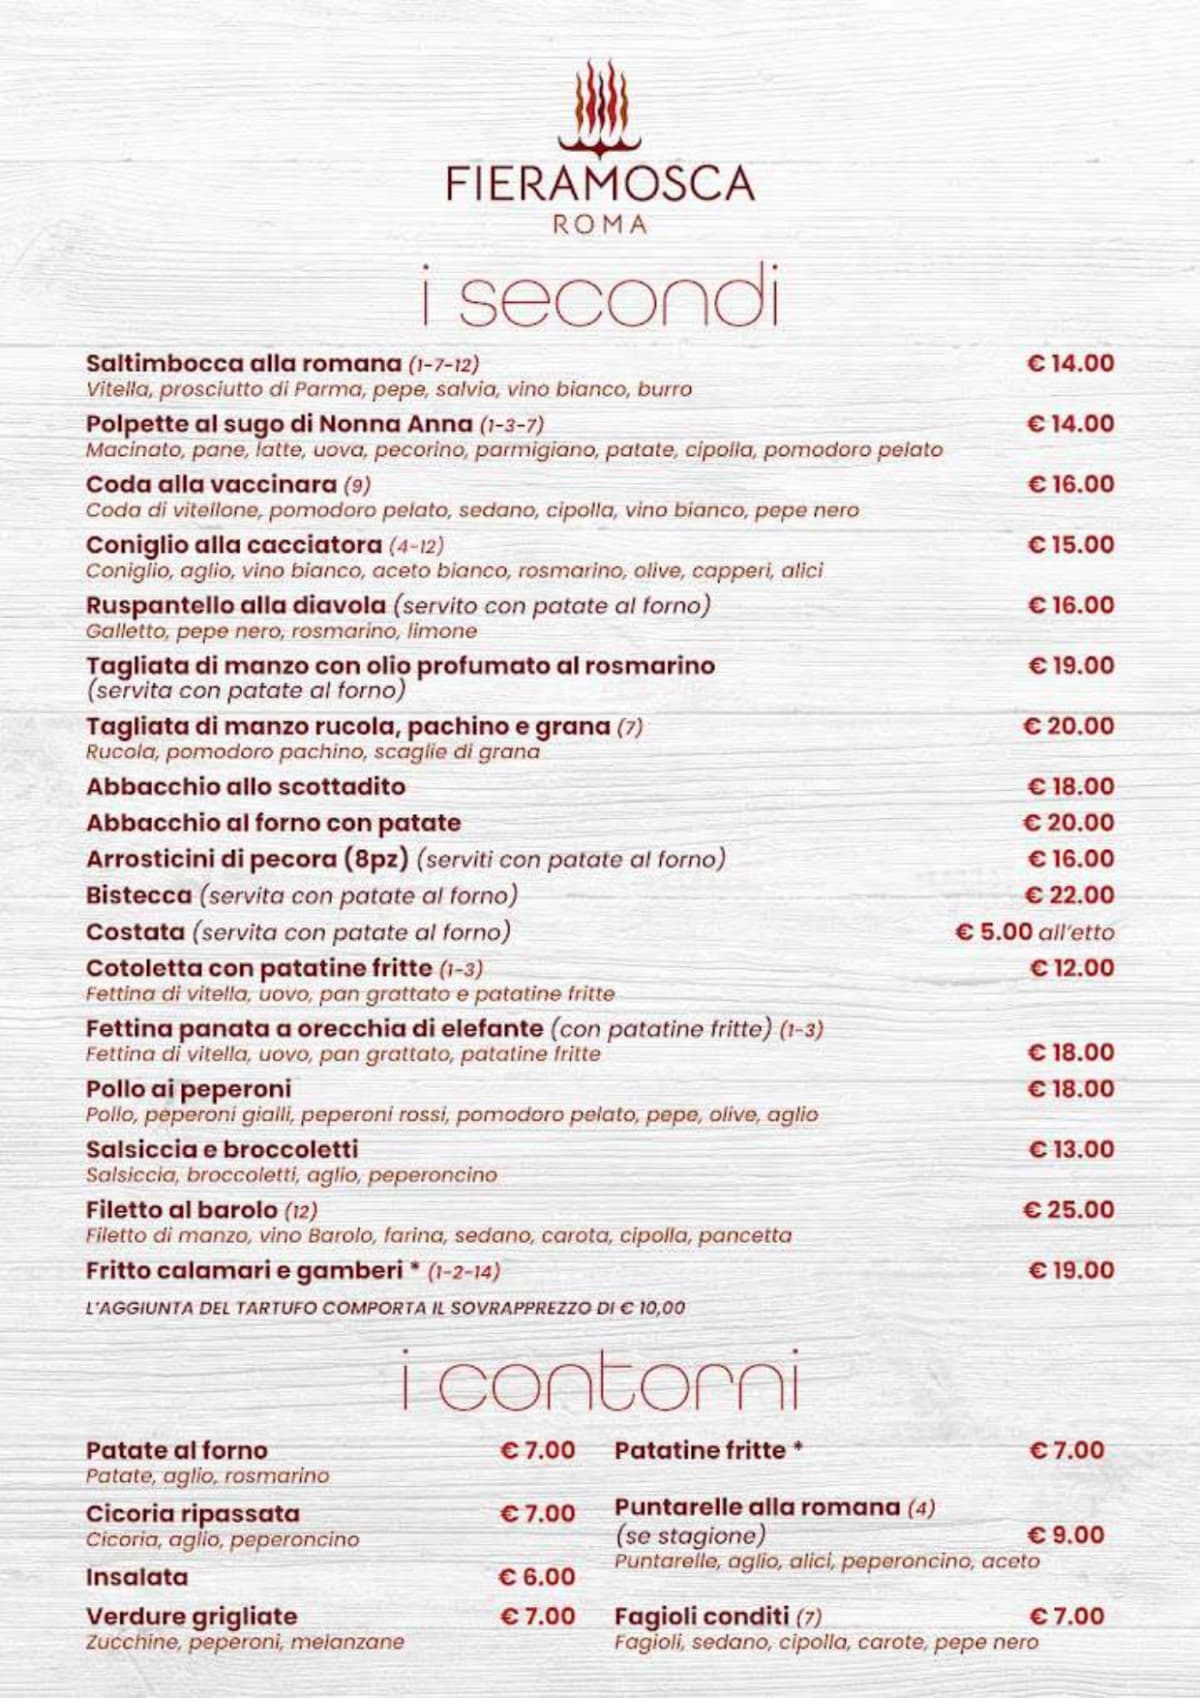 Fieramosca Roma menu